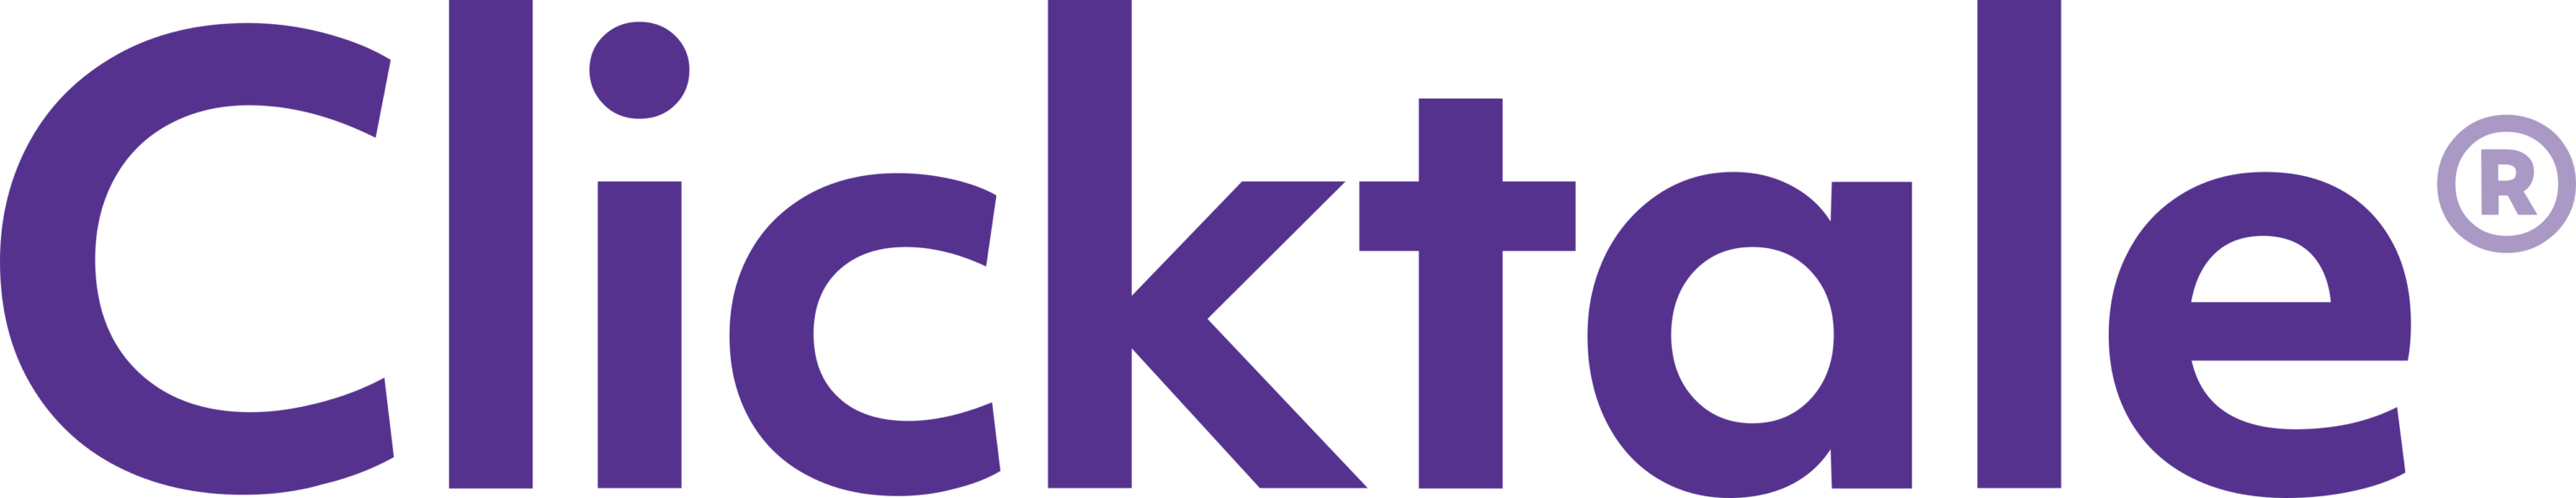 Clicktale Logo